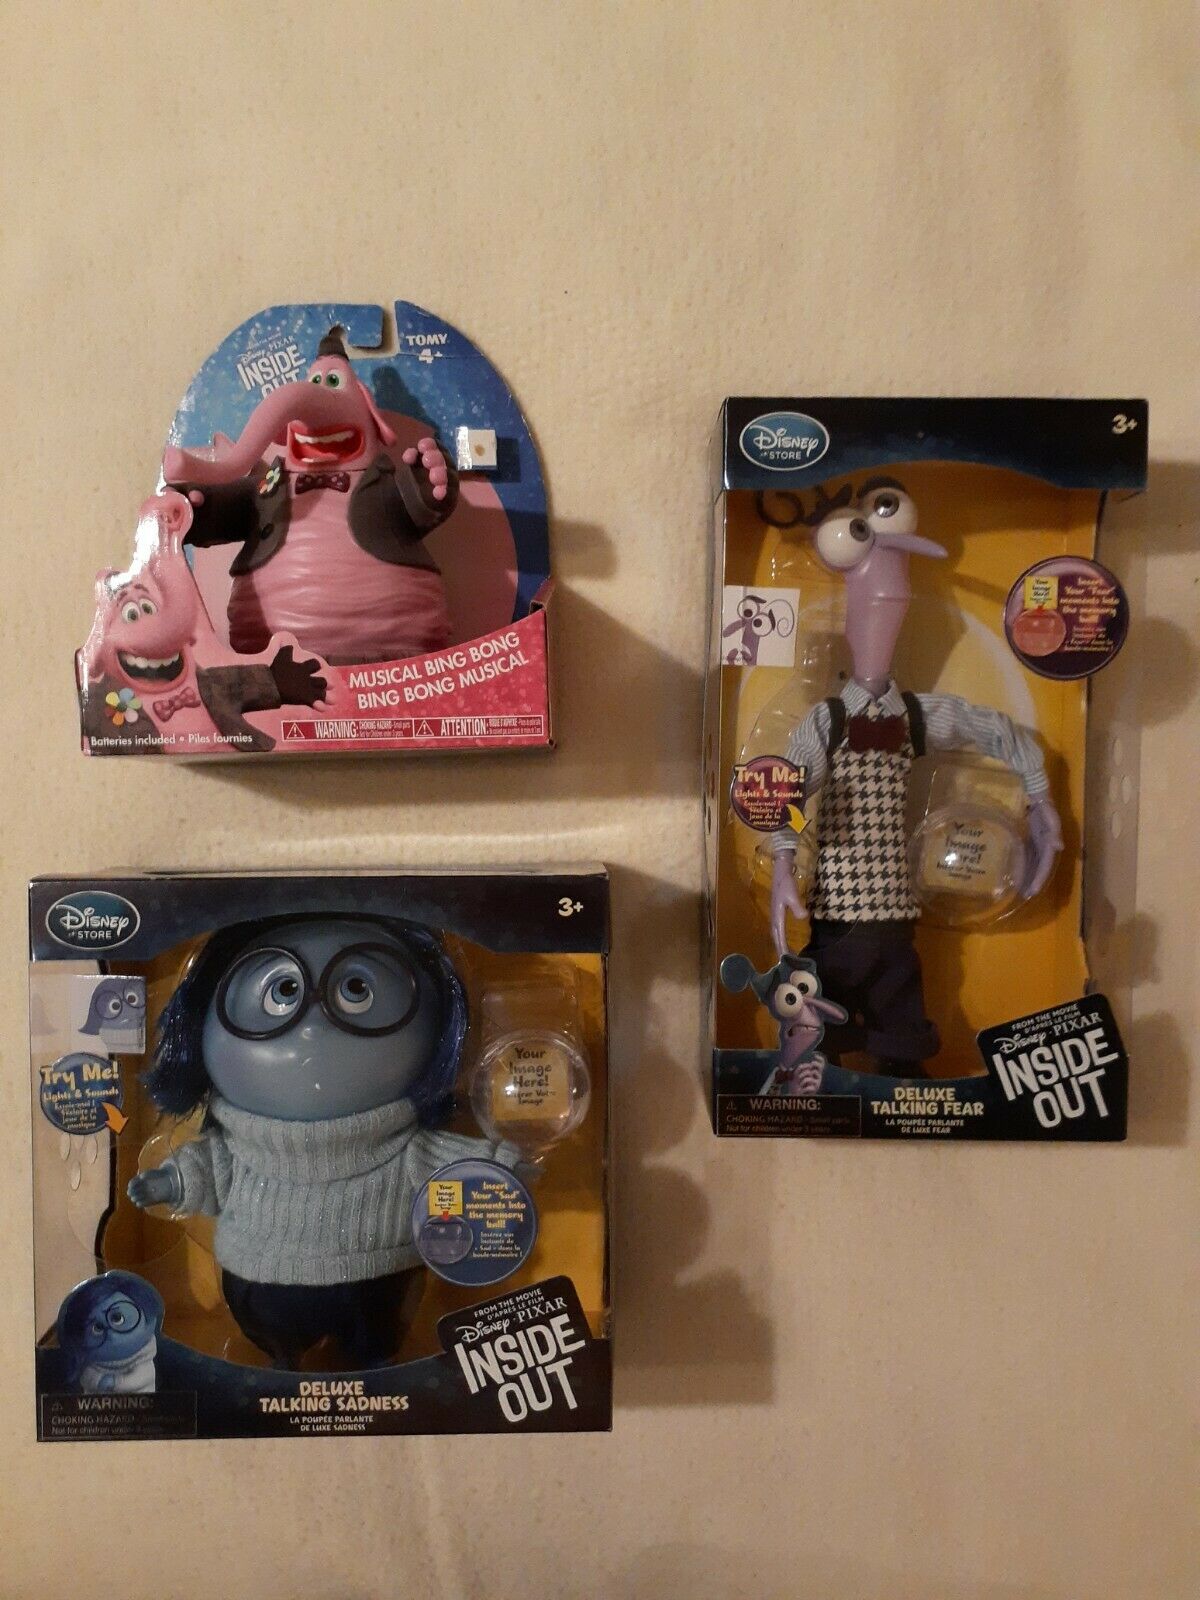 Disney Store Inside Out Talking Doll Fear Sadness Musical Tomy Bing Bong Pixar